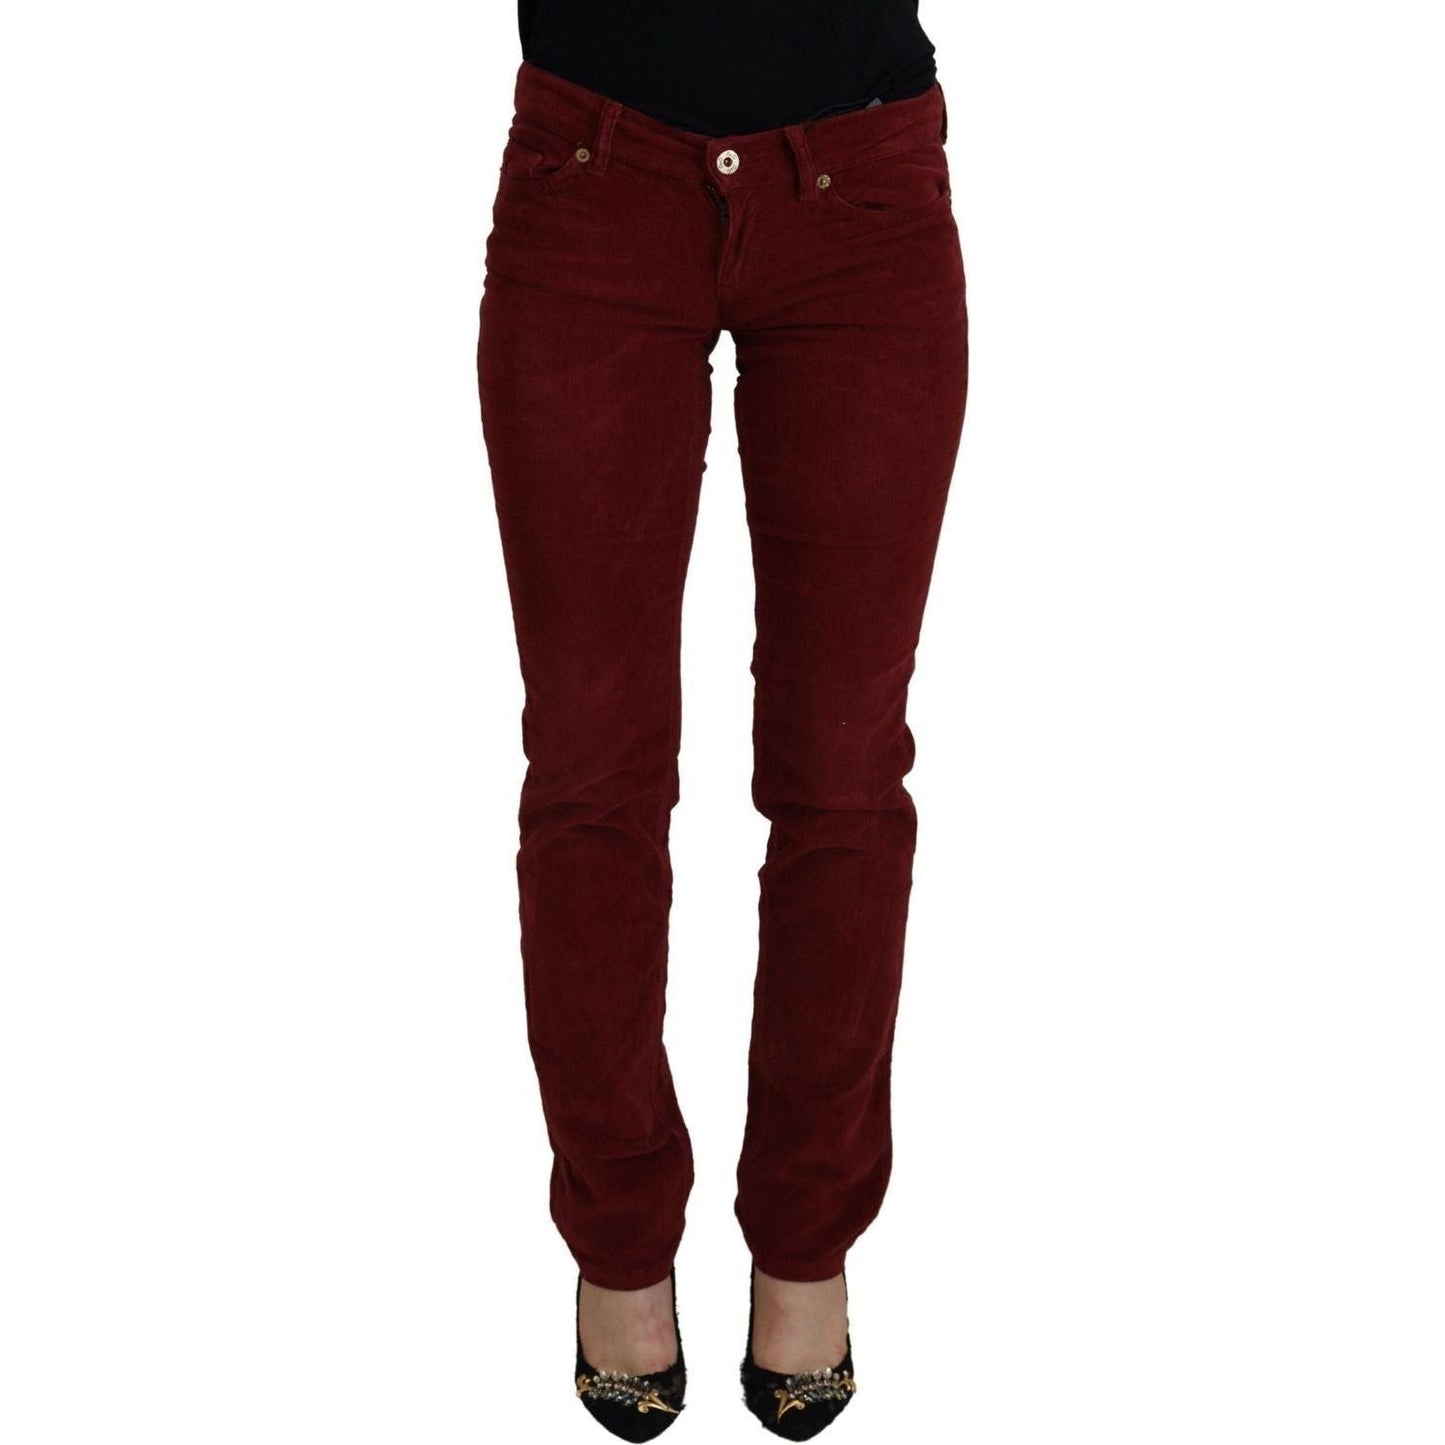 Dolce & Gabbana Chic Maroon Corduroy Pants maroon-corduroy-slim-fit-women-casual-pants